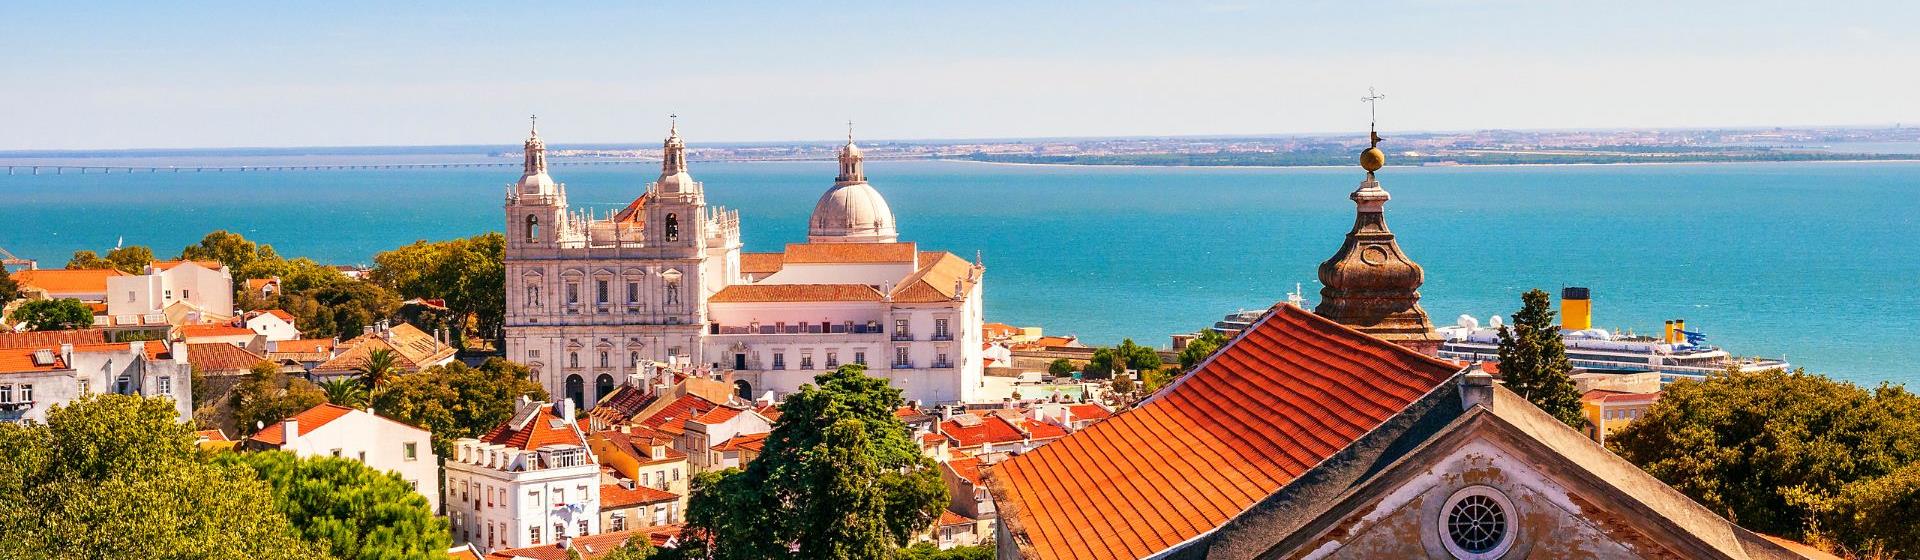 Holidays & City Breaks to Lisbon